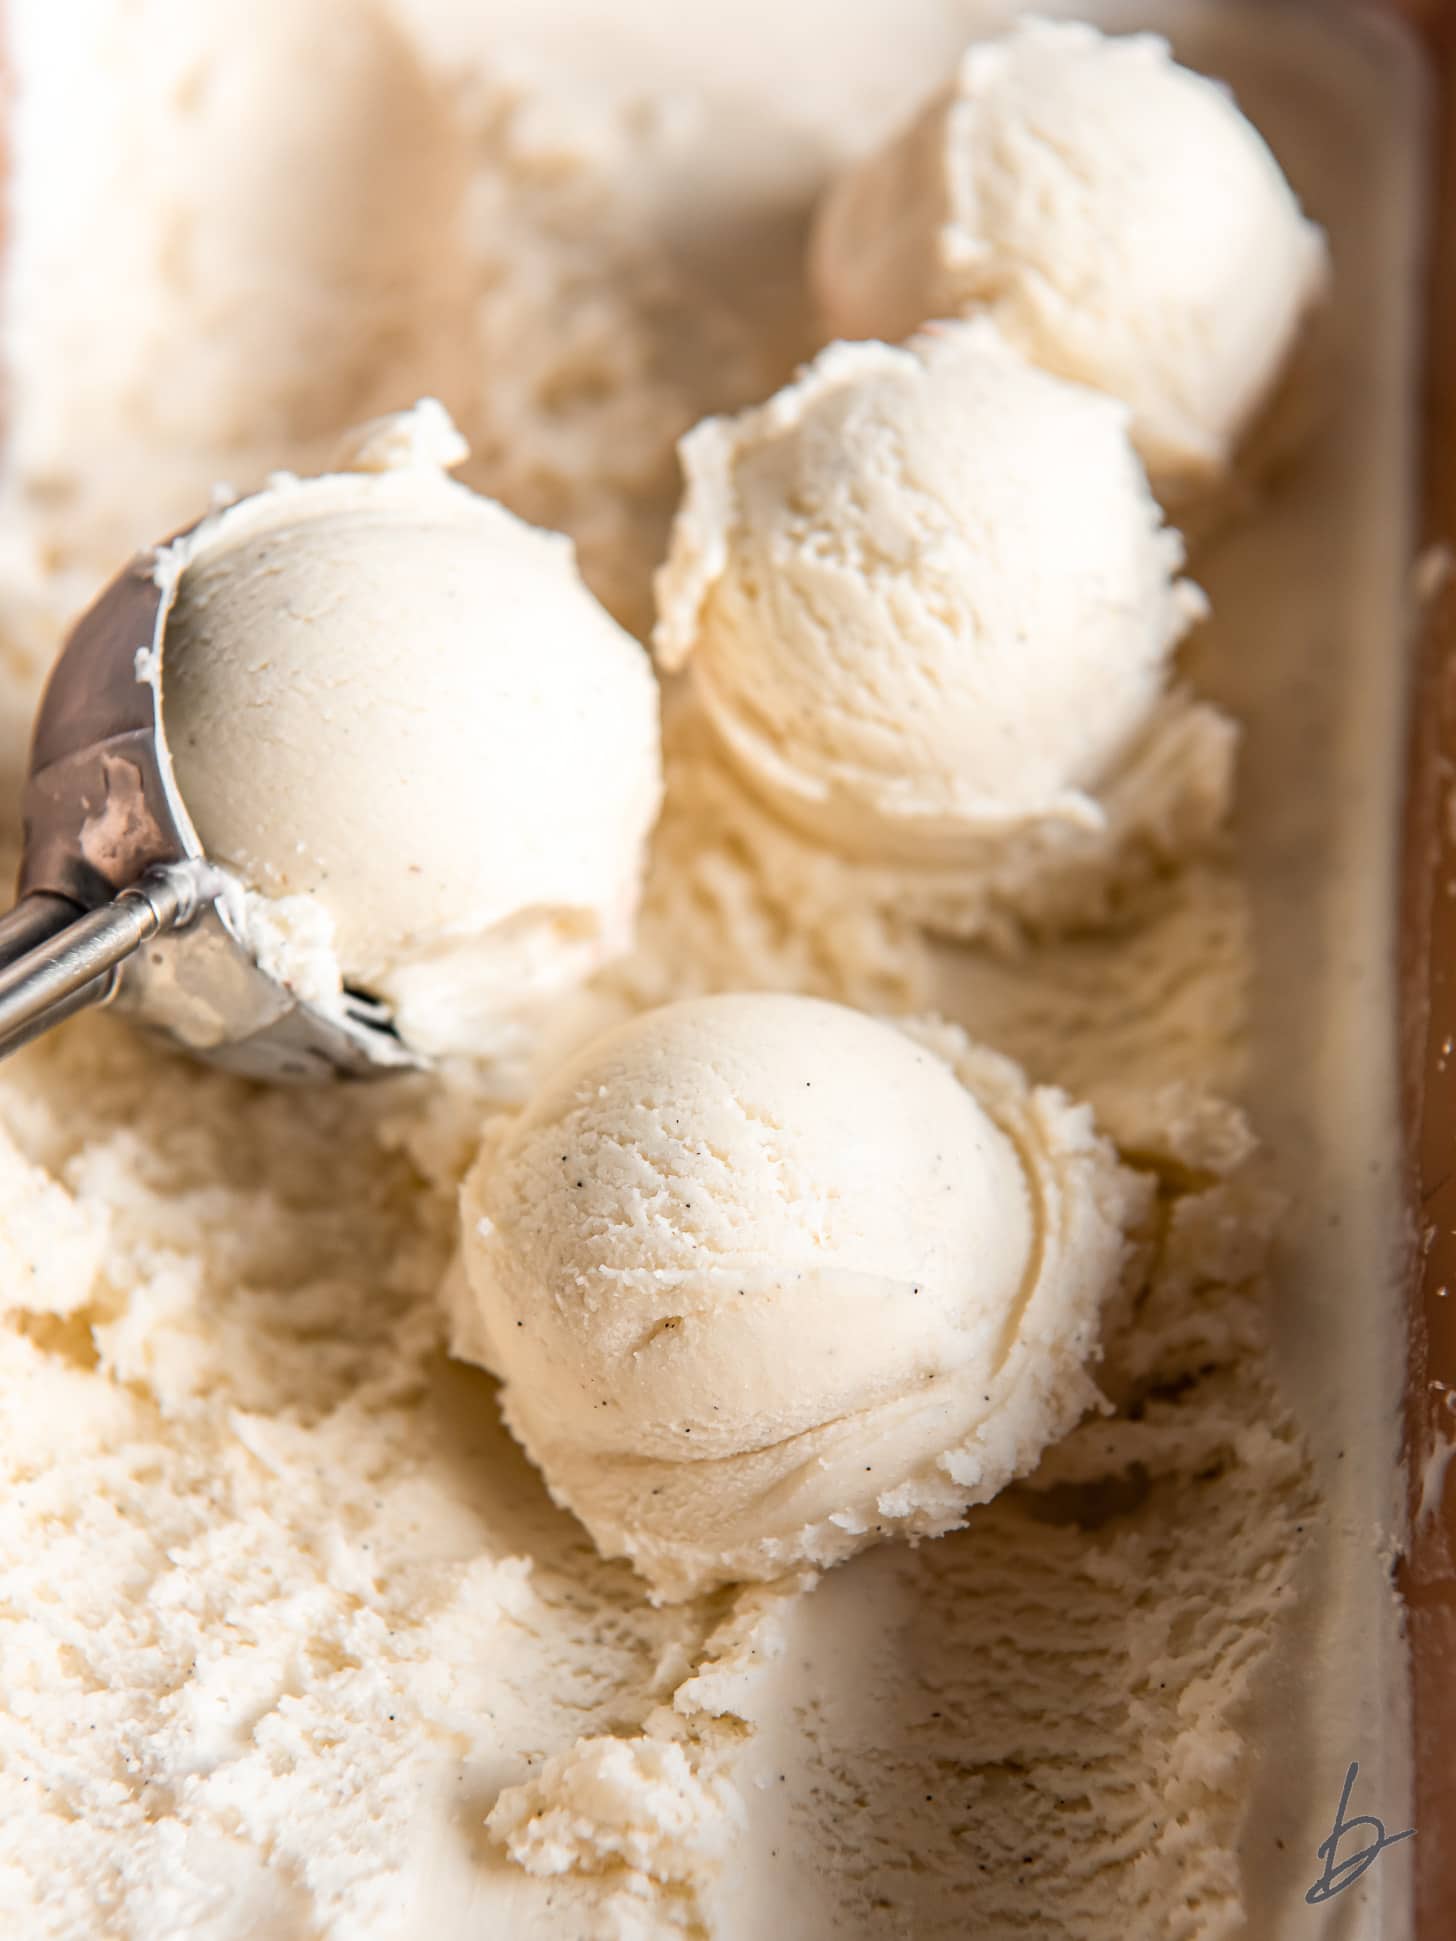 scoops of vanilla ice cream on top of ice cream in container.